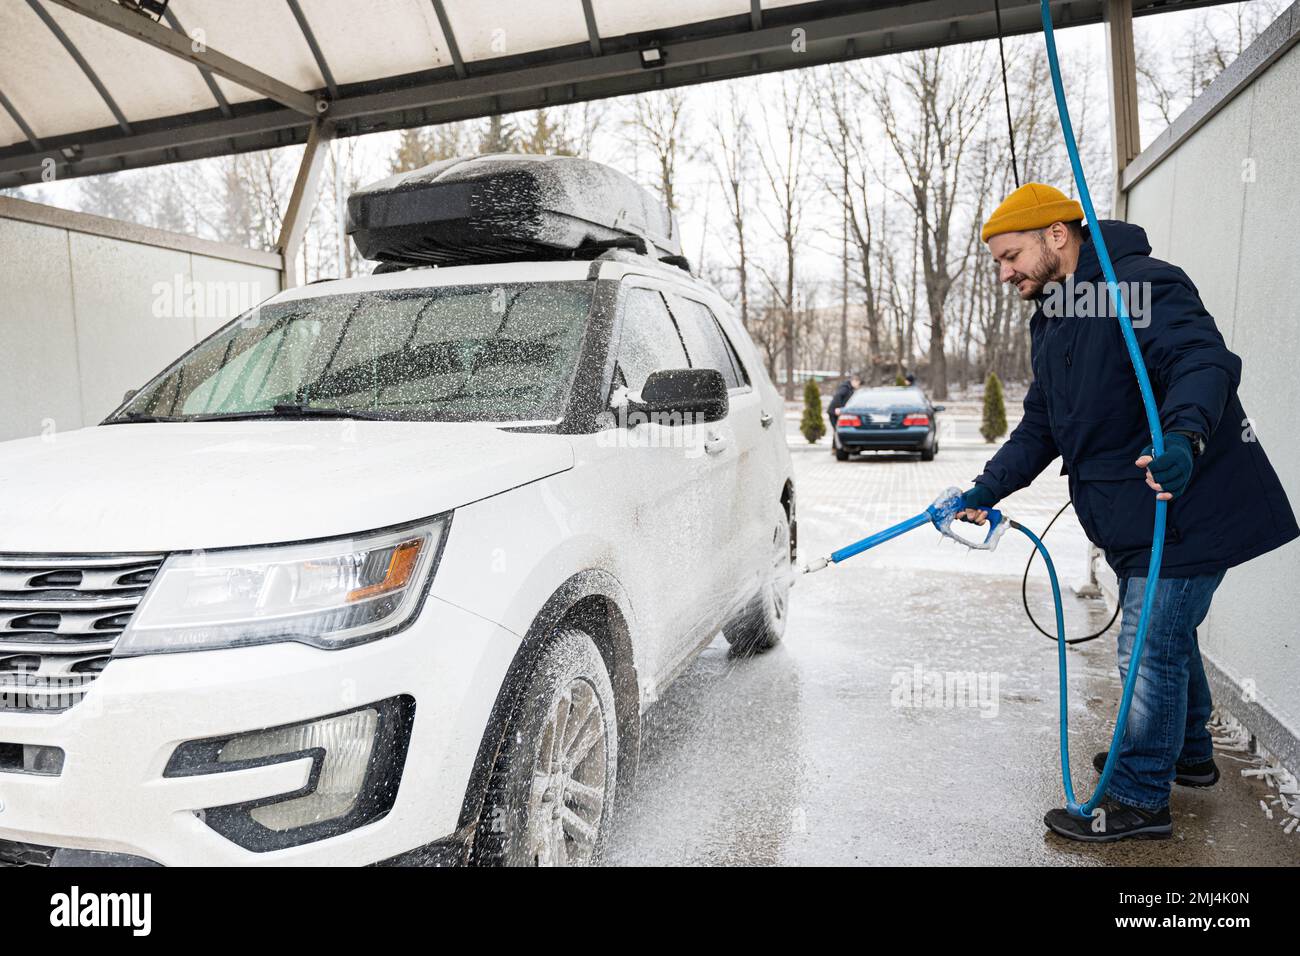 Self clean car wash gas -Fotos und -Bildmaterial in hoher Auflösung – Alamy